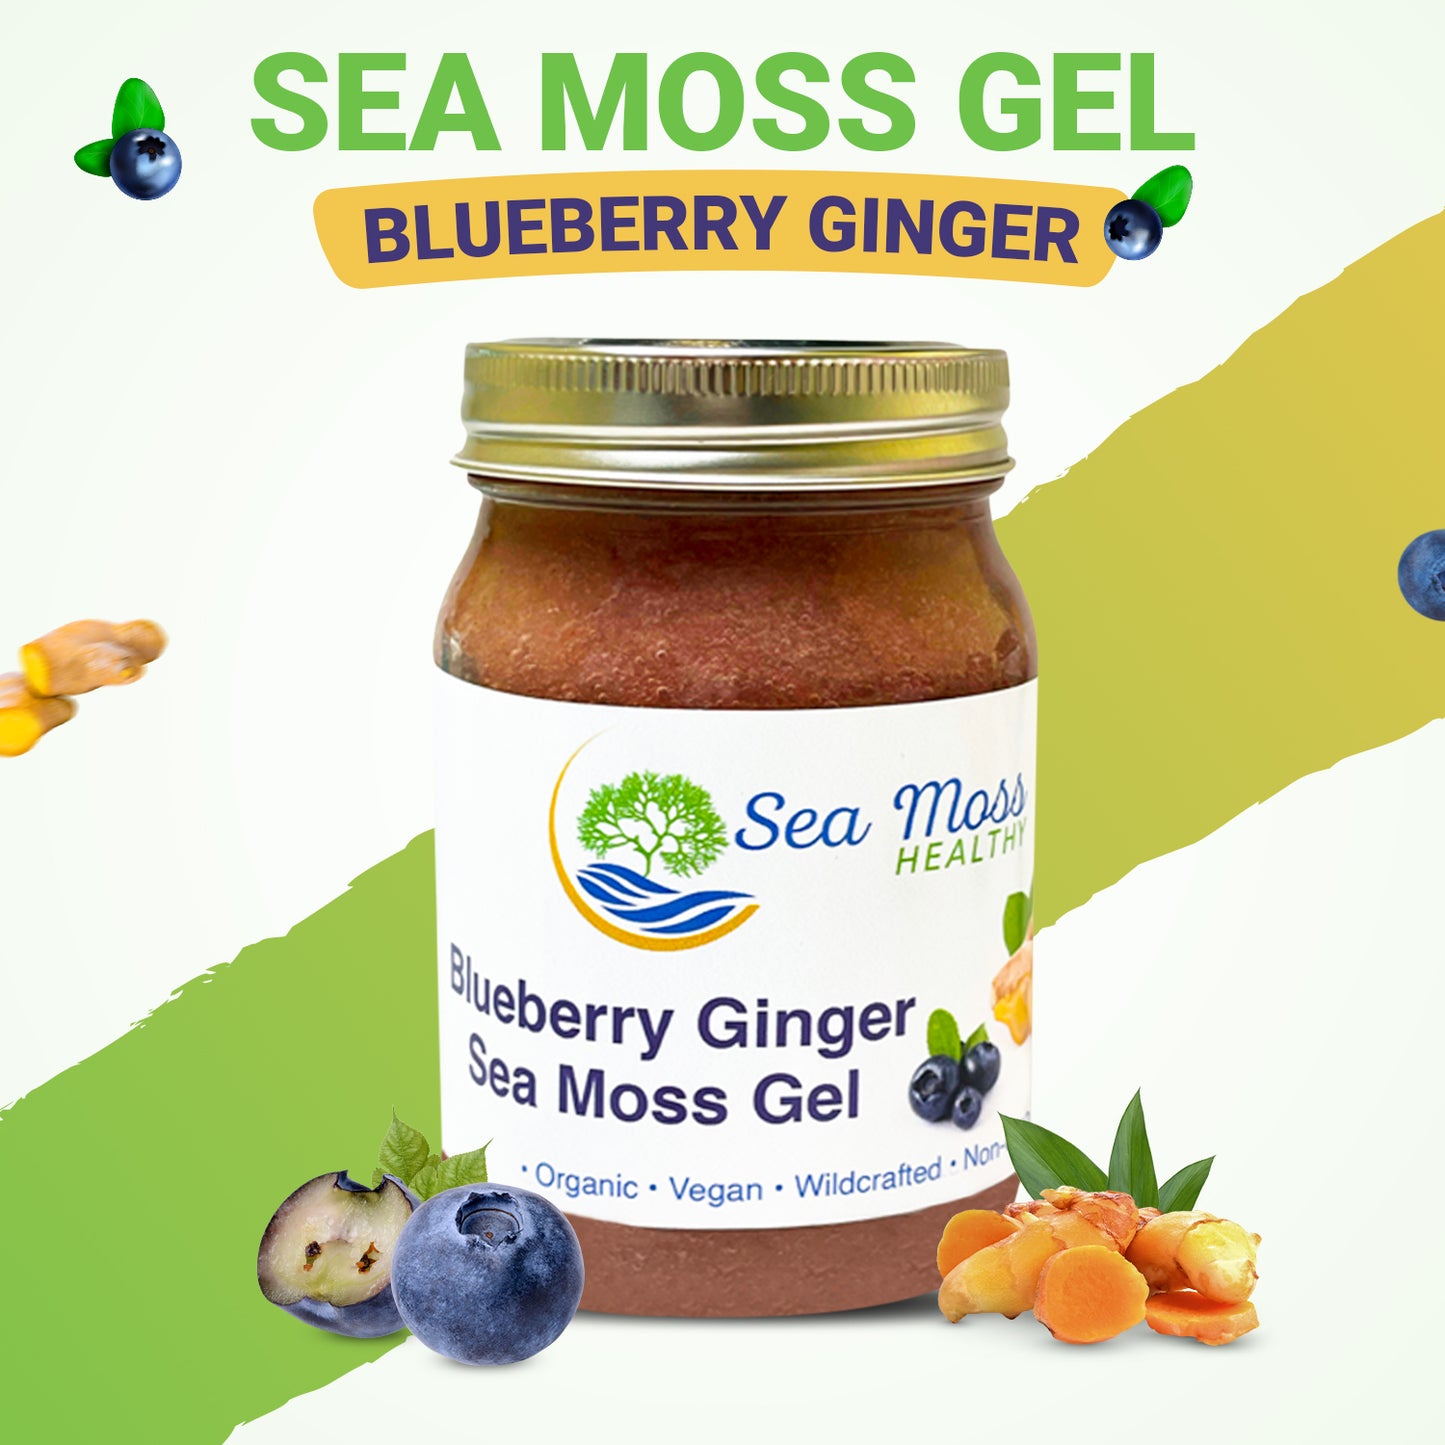 Blueberry Ginger Sea Moss Gel